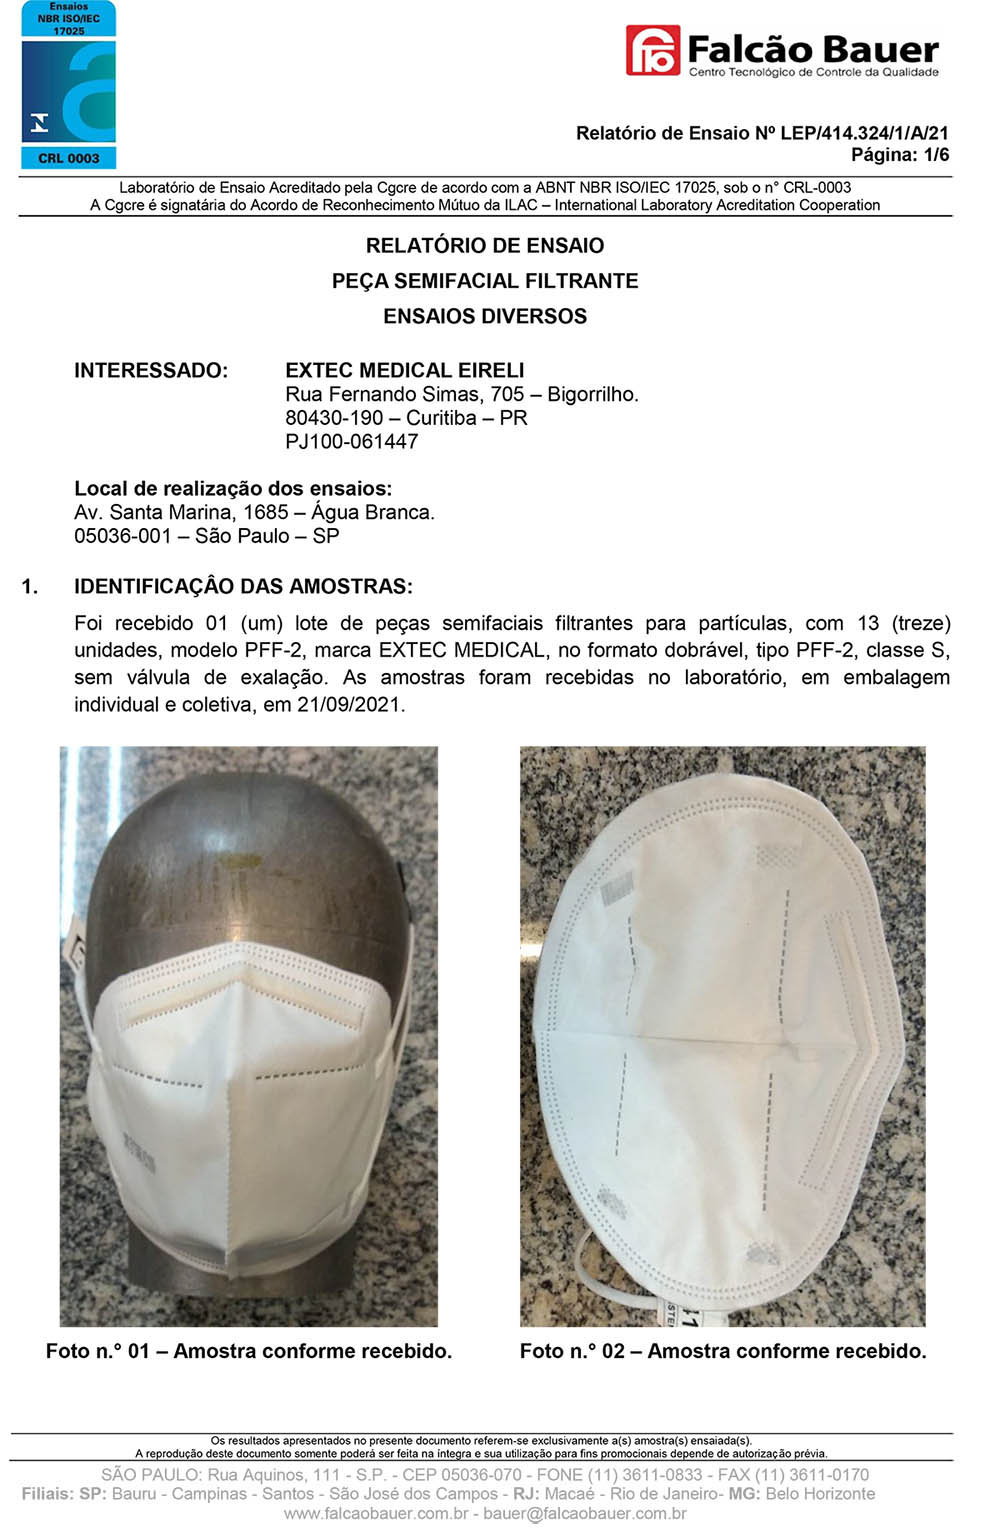 Máscara PFF2 / N95 / KN95 adulto pink - pacote 10 unidades 5 camadas duplo meltblow BFE 98% + feltro de coton + tnt spunbond hospitalar hipoalergenico